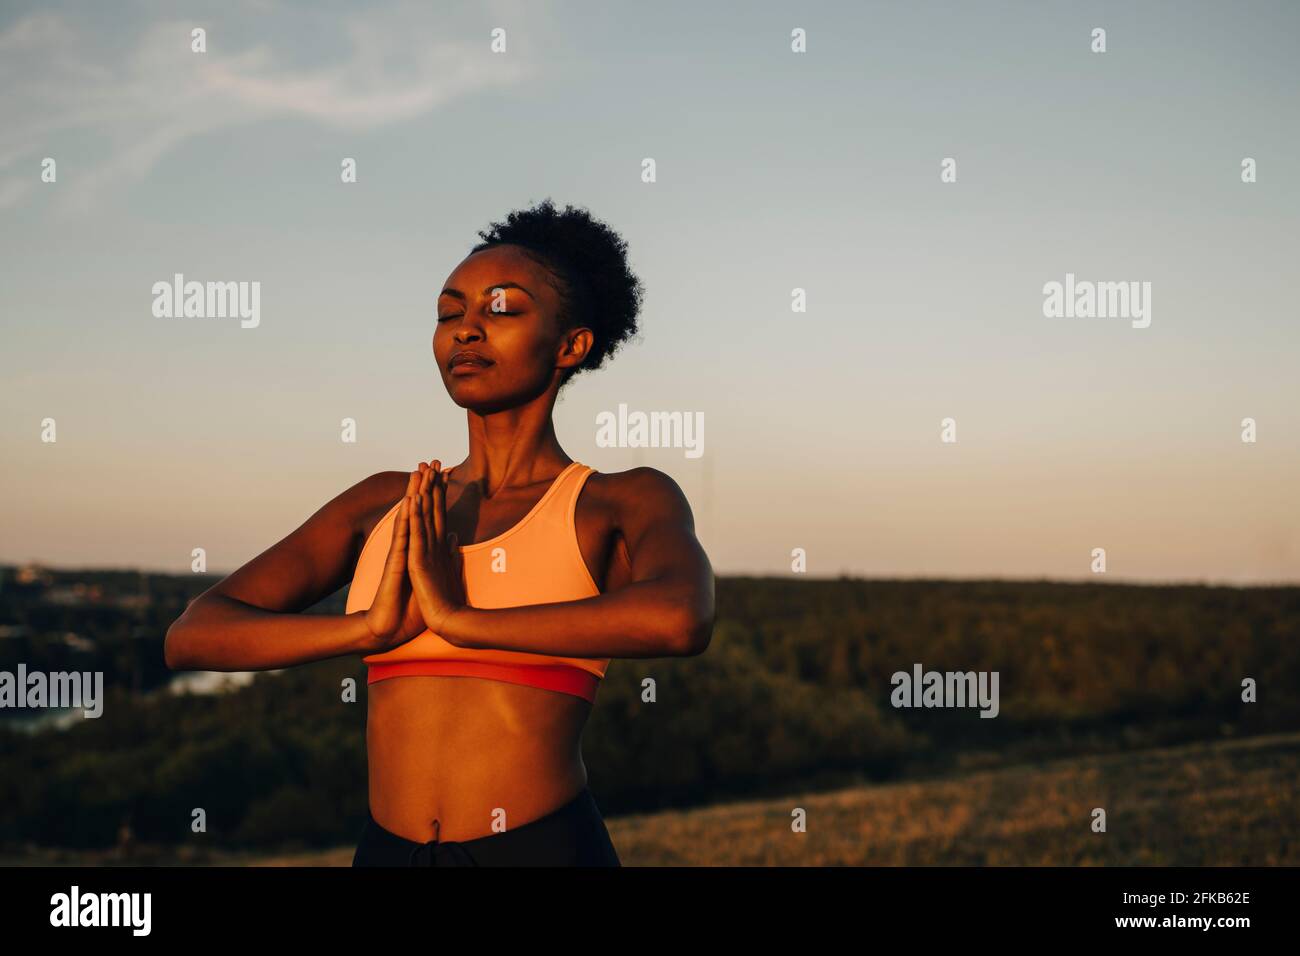 Junge Sportlerin meditiert während des Sonnenuntergangs gegen den Himmel Stockfoto